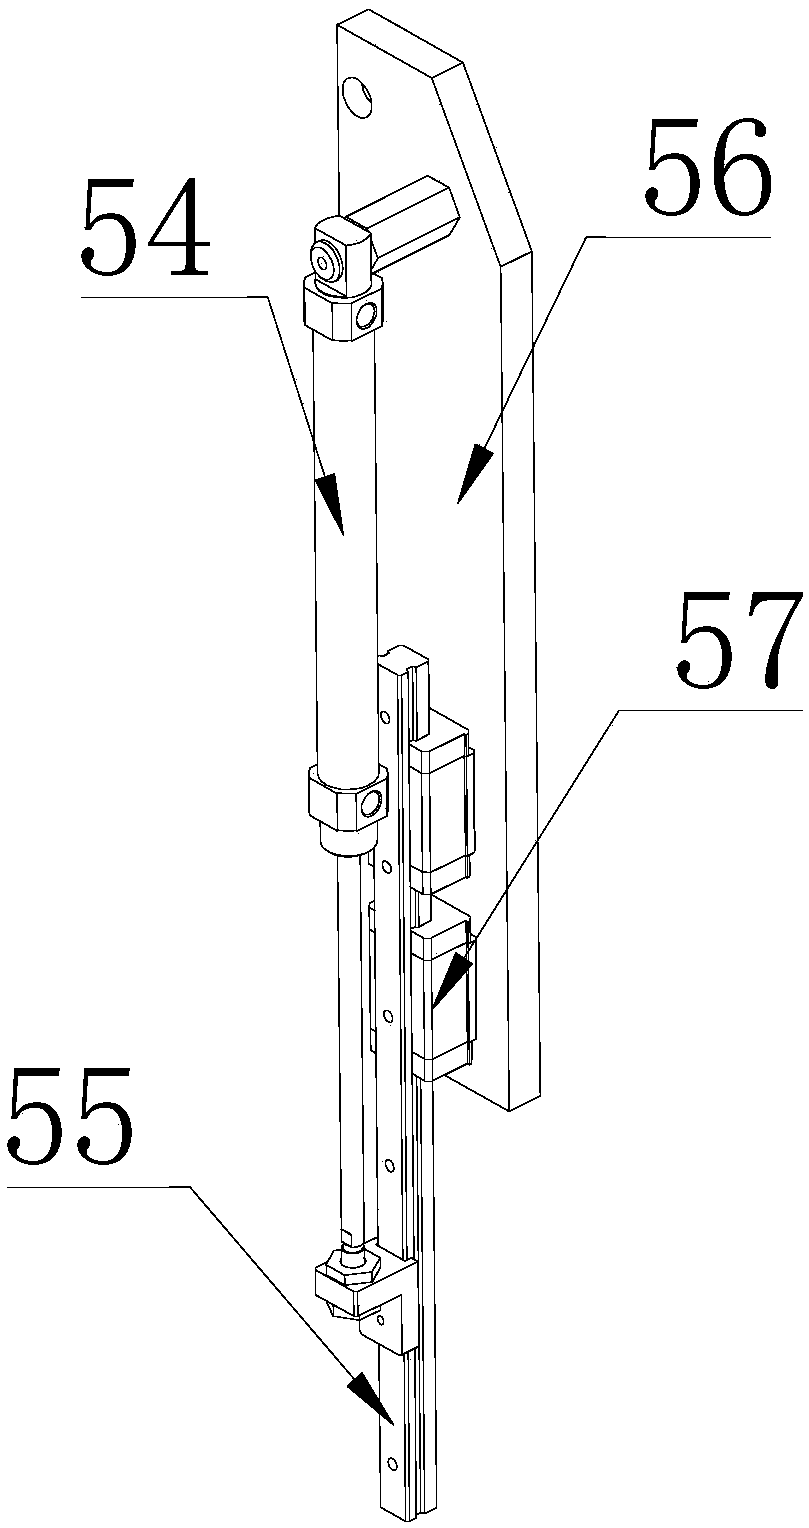 Generator rotor automatic feeding mechanism